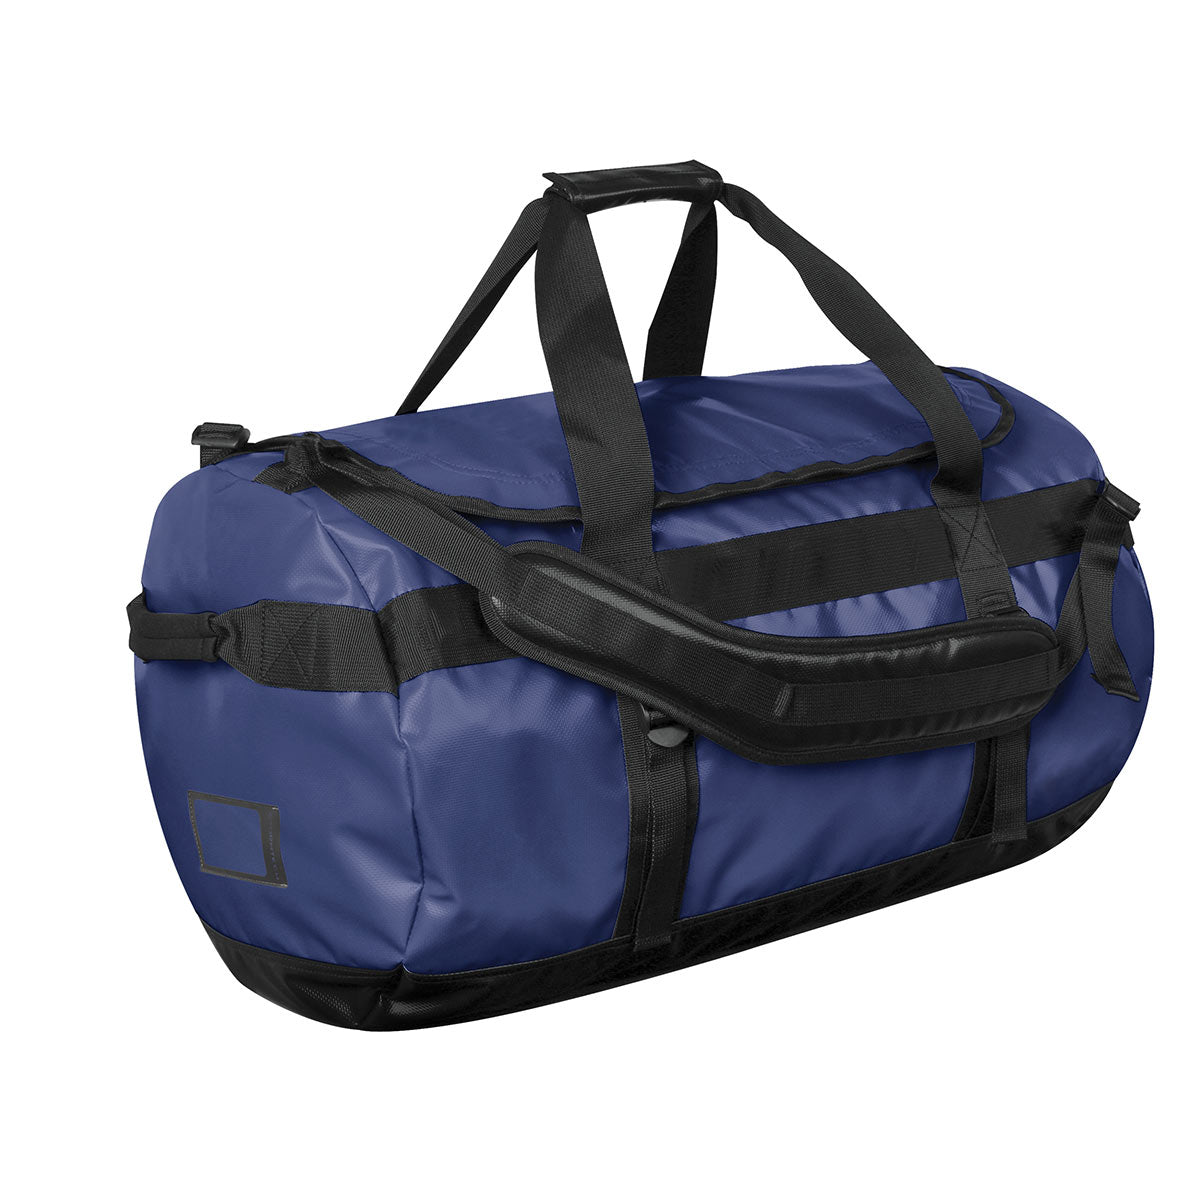 Atlantis Waterproof Gear Bag (M) - GBW-1M